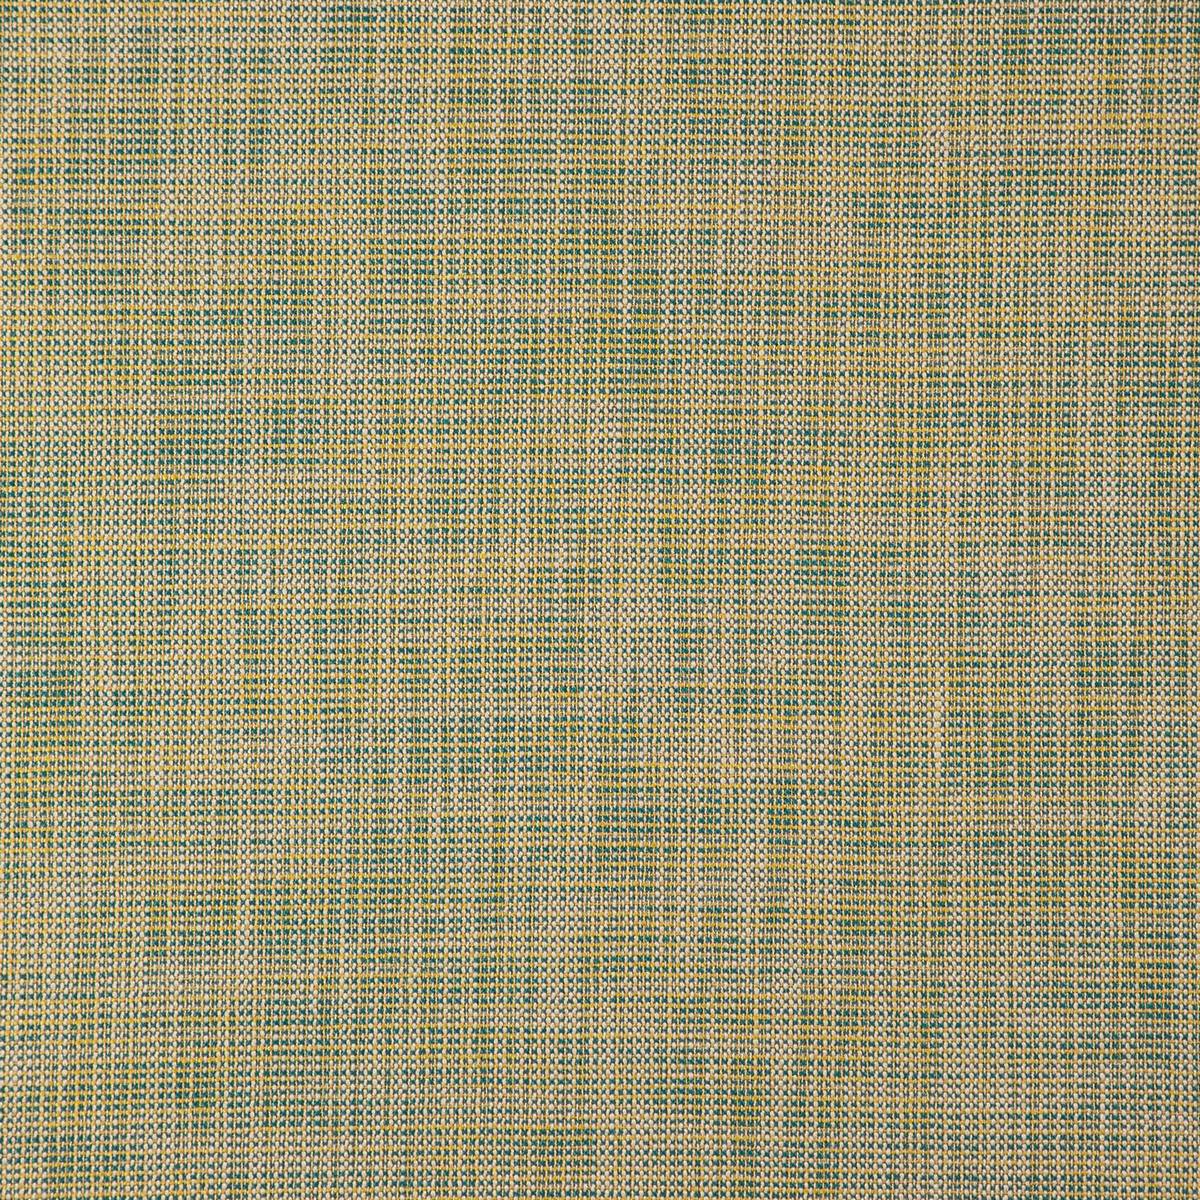 Levens Citronelle Fabric by Sanderson